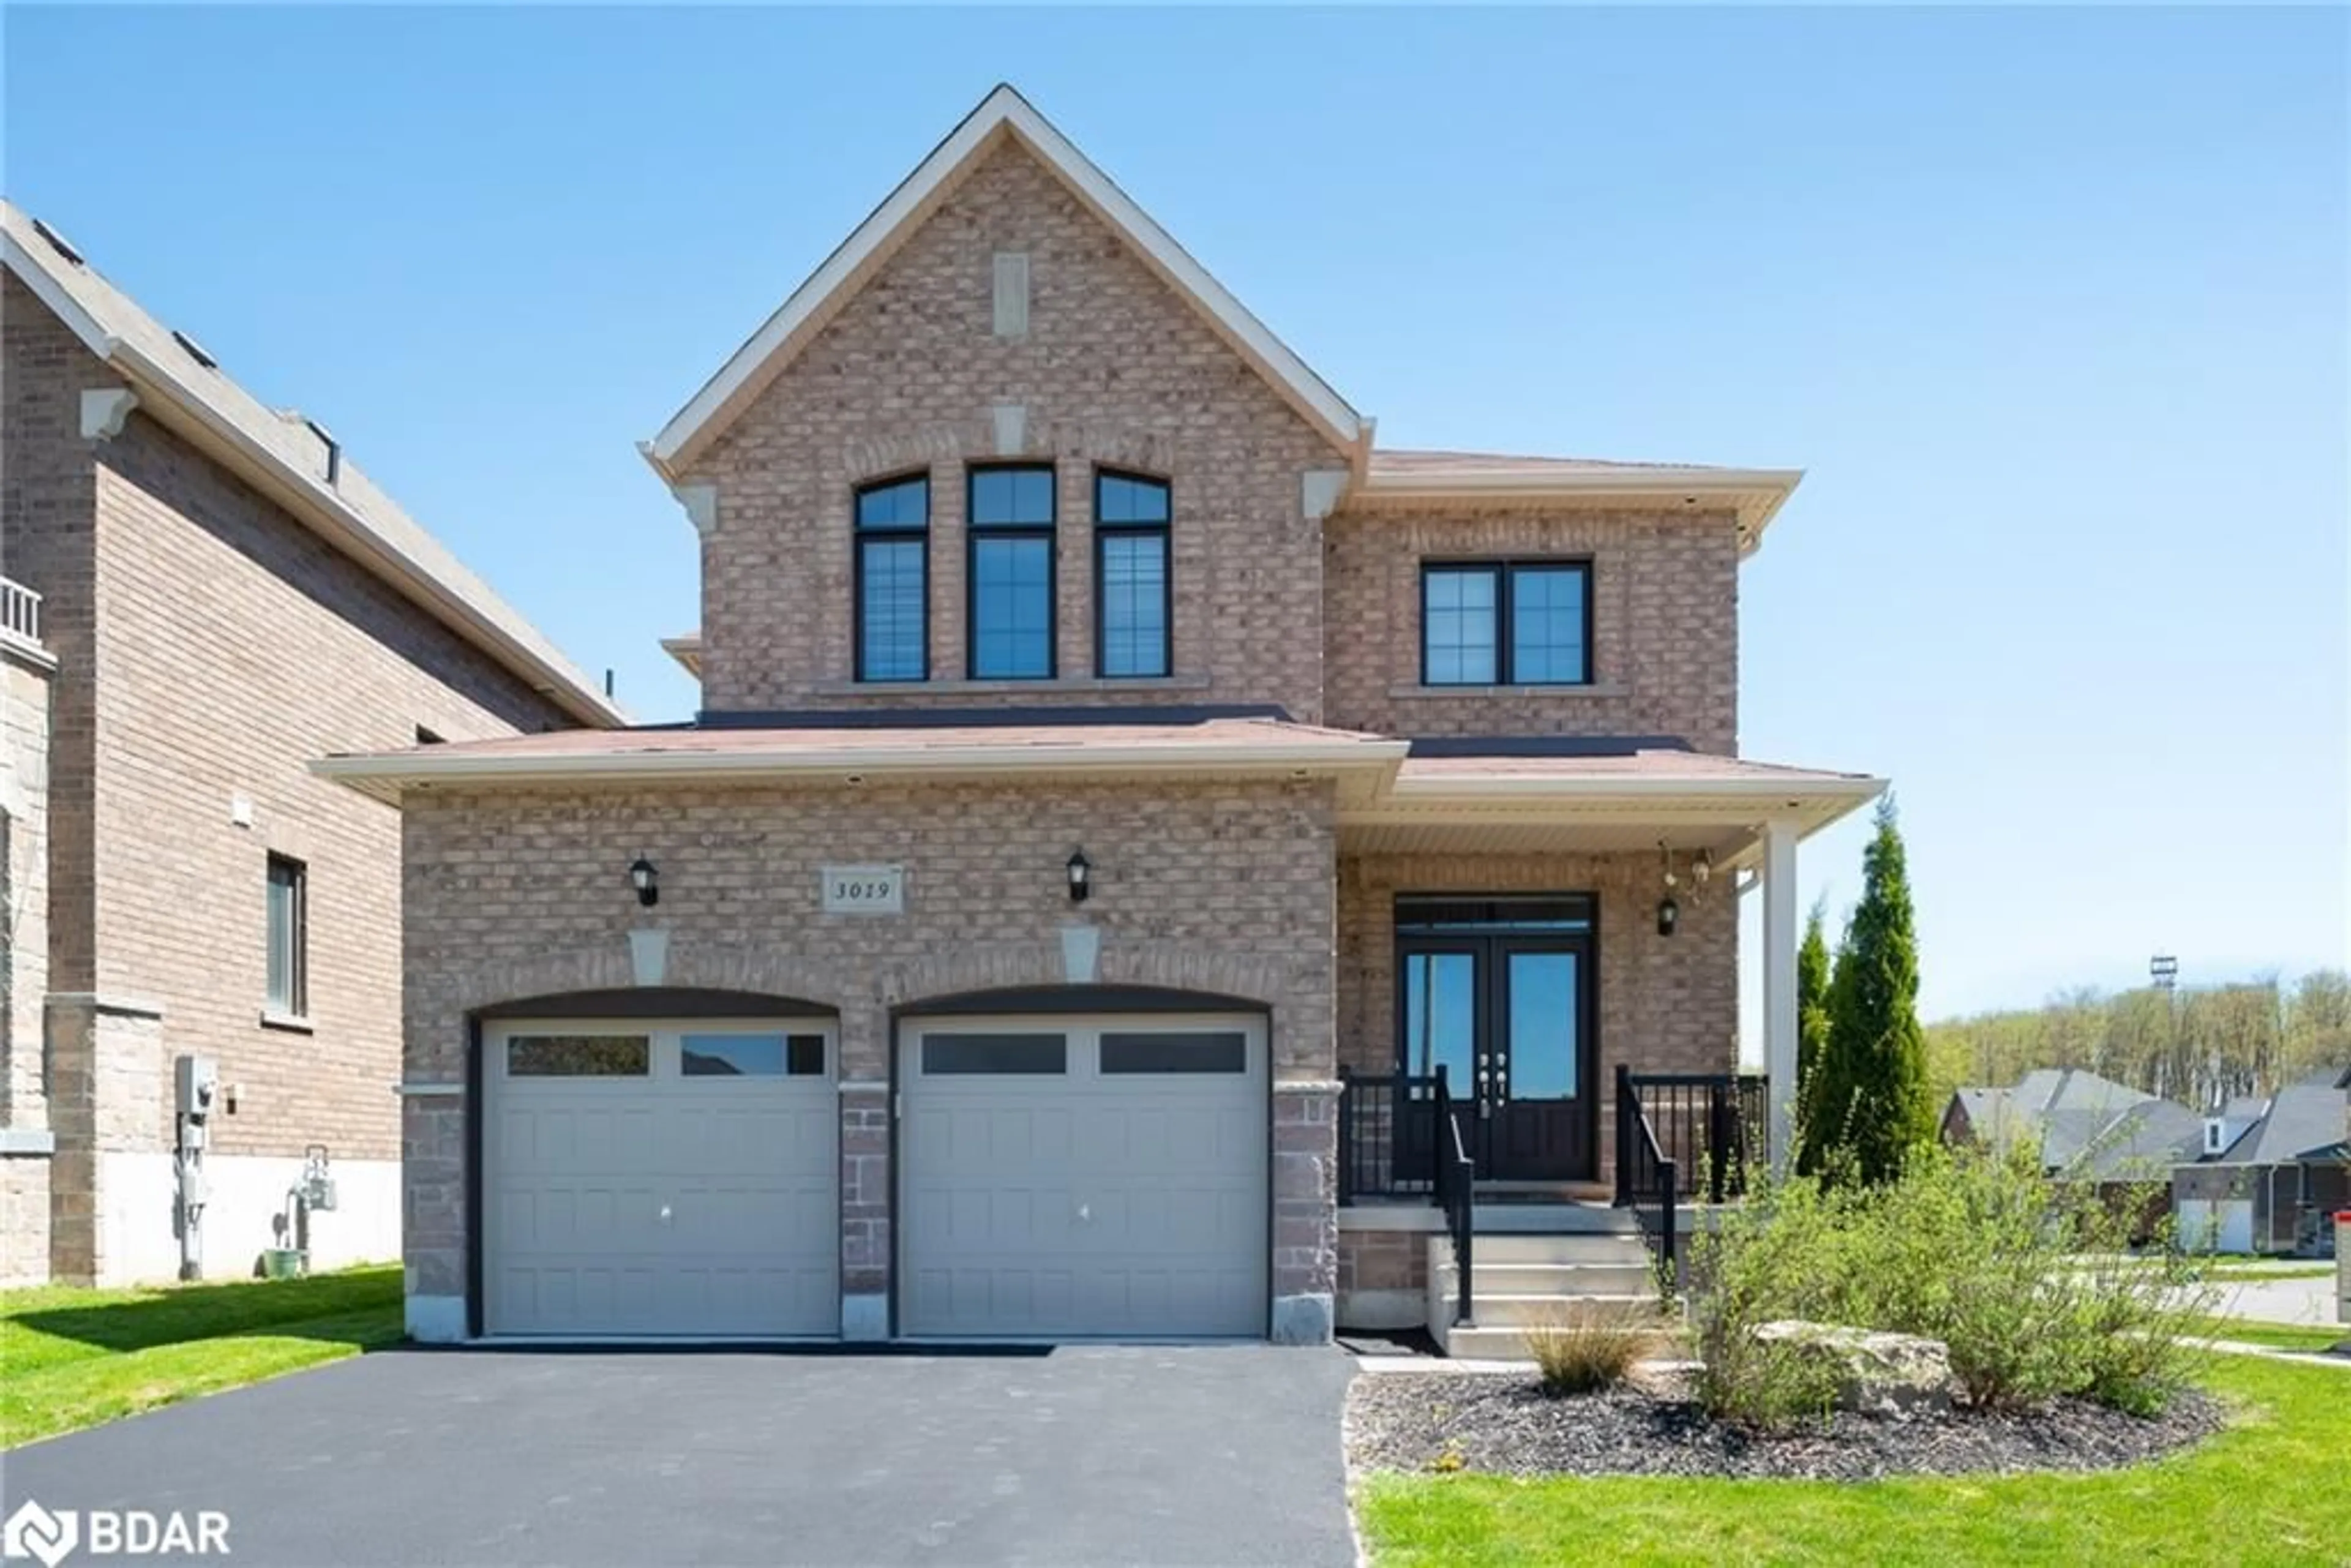 Home with brick exterior material for 3019 Orion Boulevard Blvd, Orillia Ontario L3V 8J5